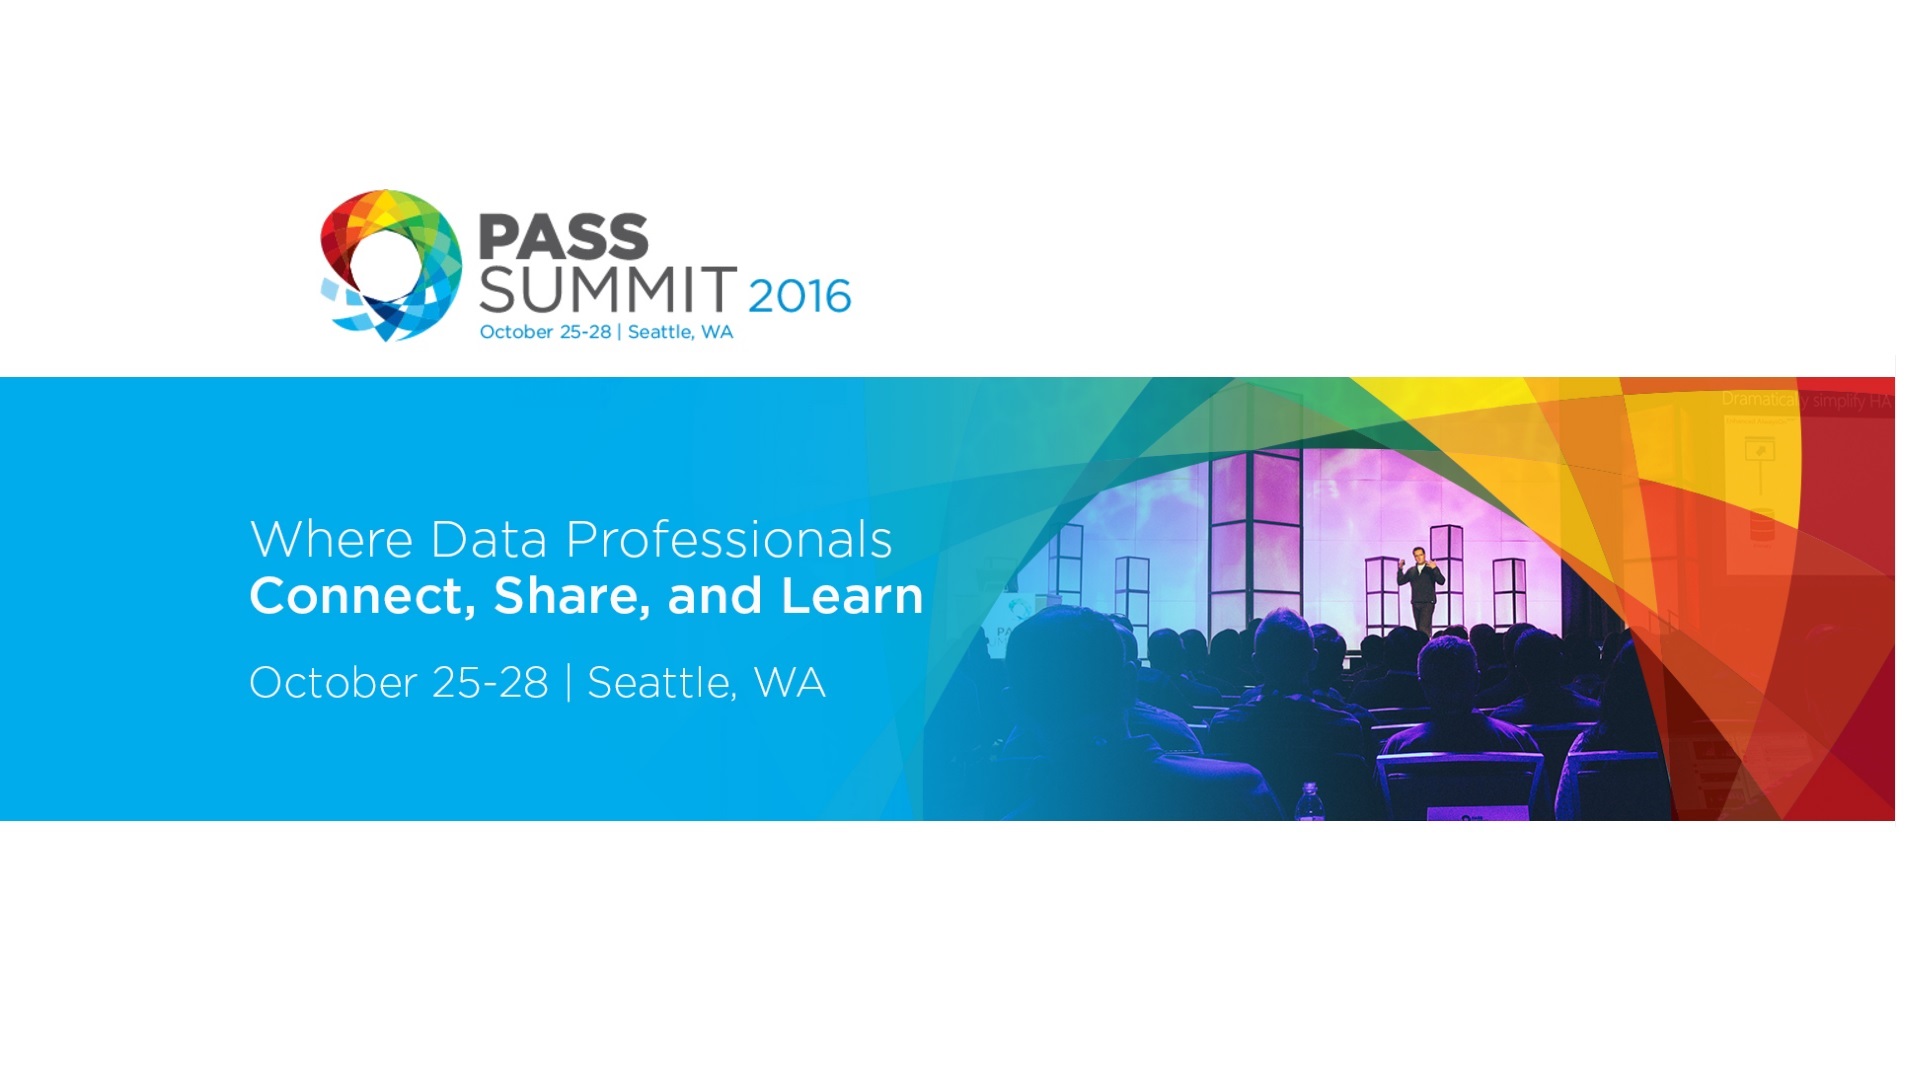 SQL PASS SUMMIT 2016 – I’m Attending: @SQLPASS